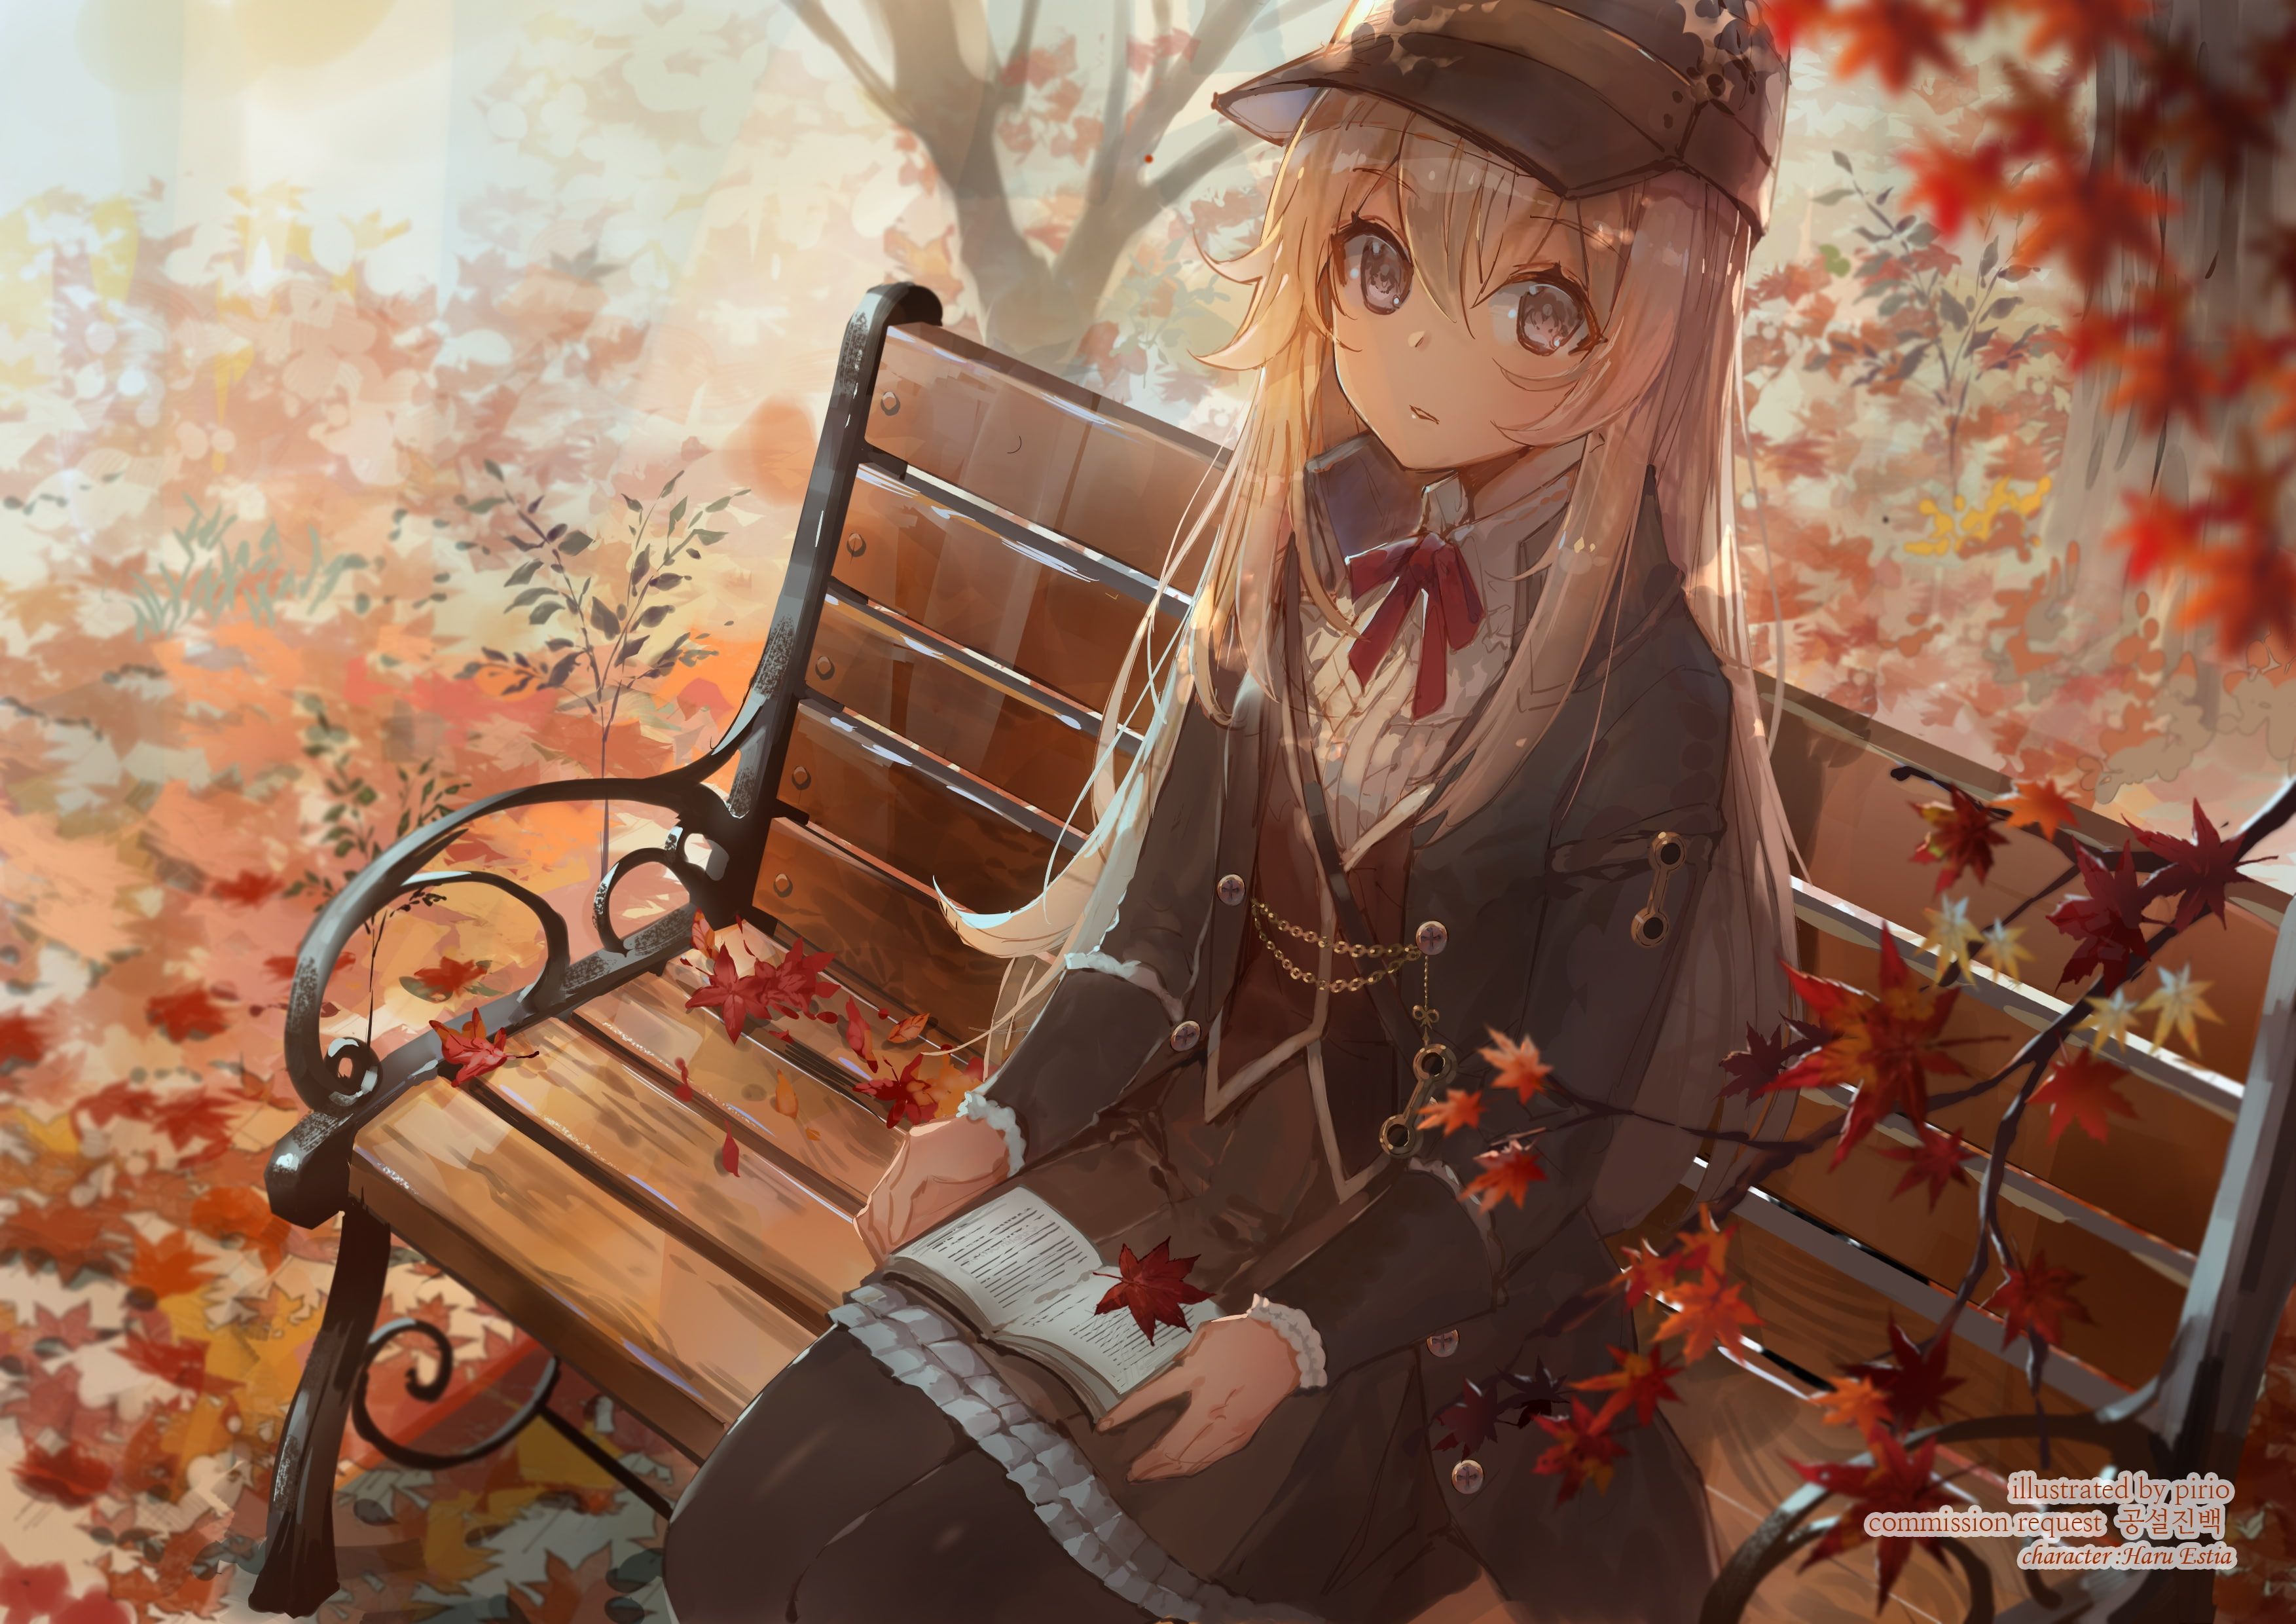 haru estia soul worker anime rpg games #sitting #bench #autumn #Anime K # wallpaper #hdwallpaper #desktop. Fall anime, Anime scenery wallpaper, Anime scenery